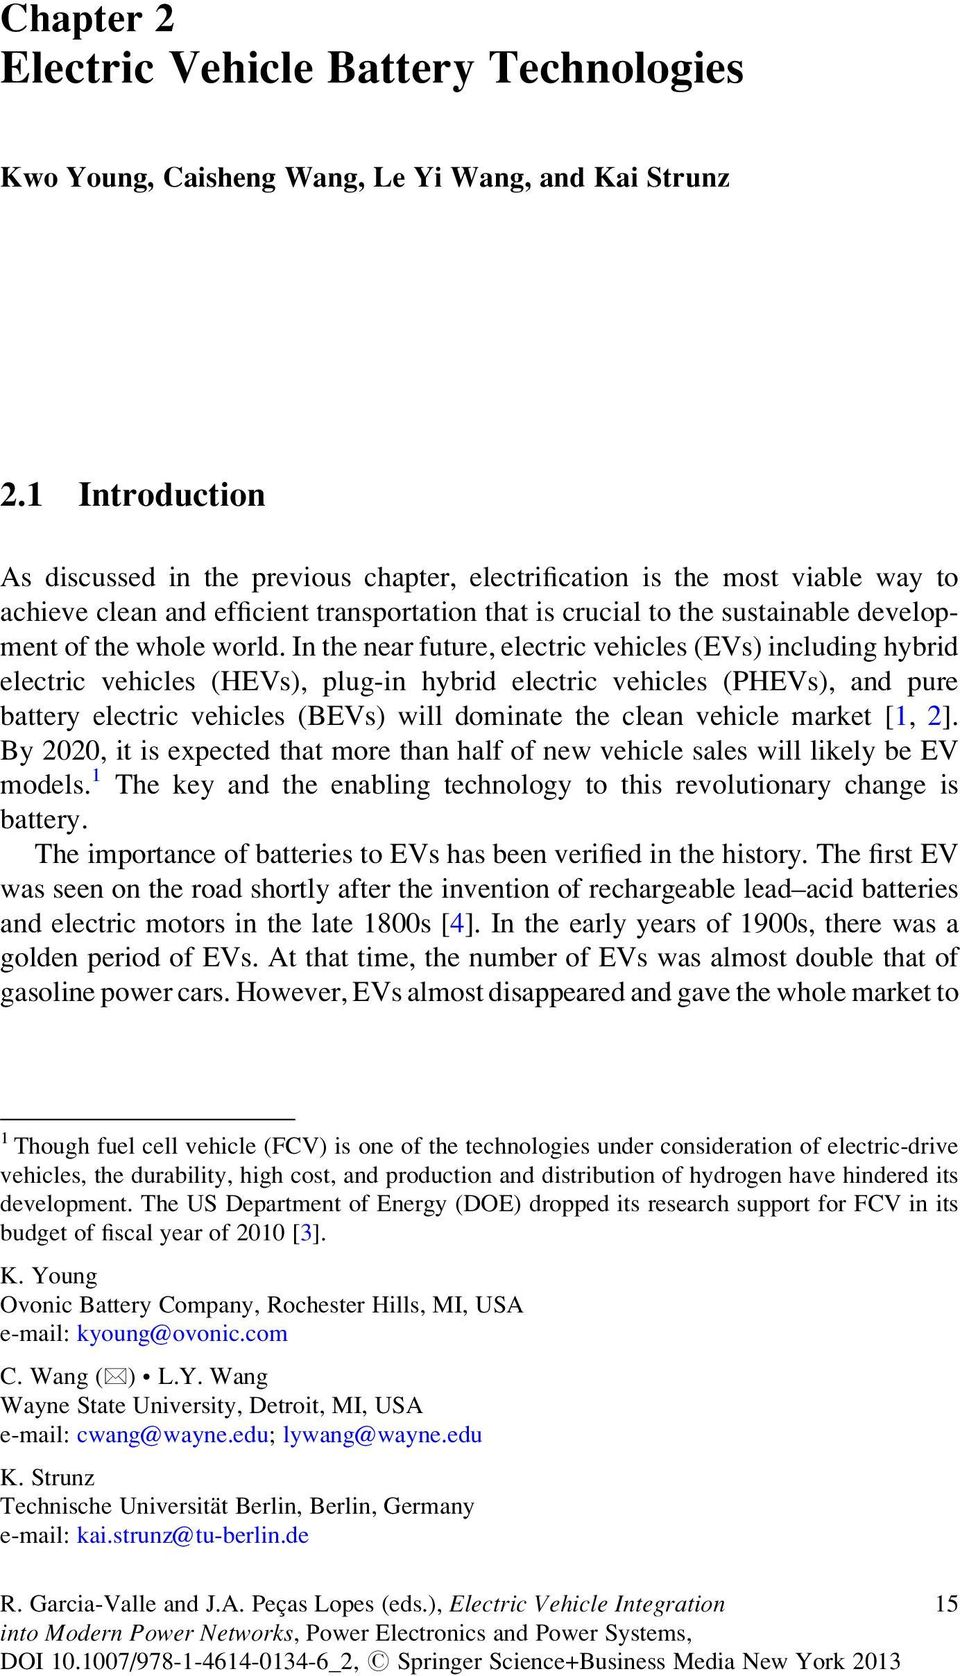 electric vehicle battery technology pdf